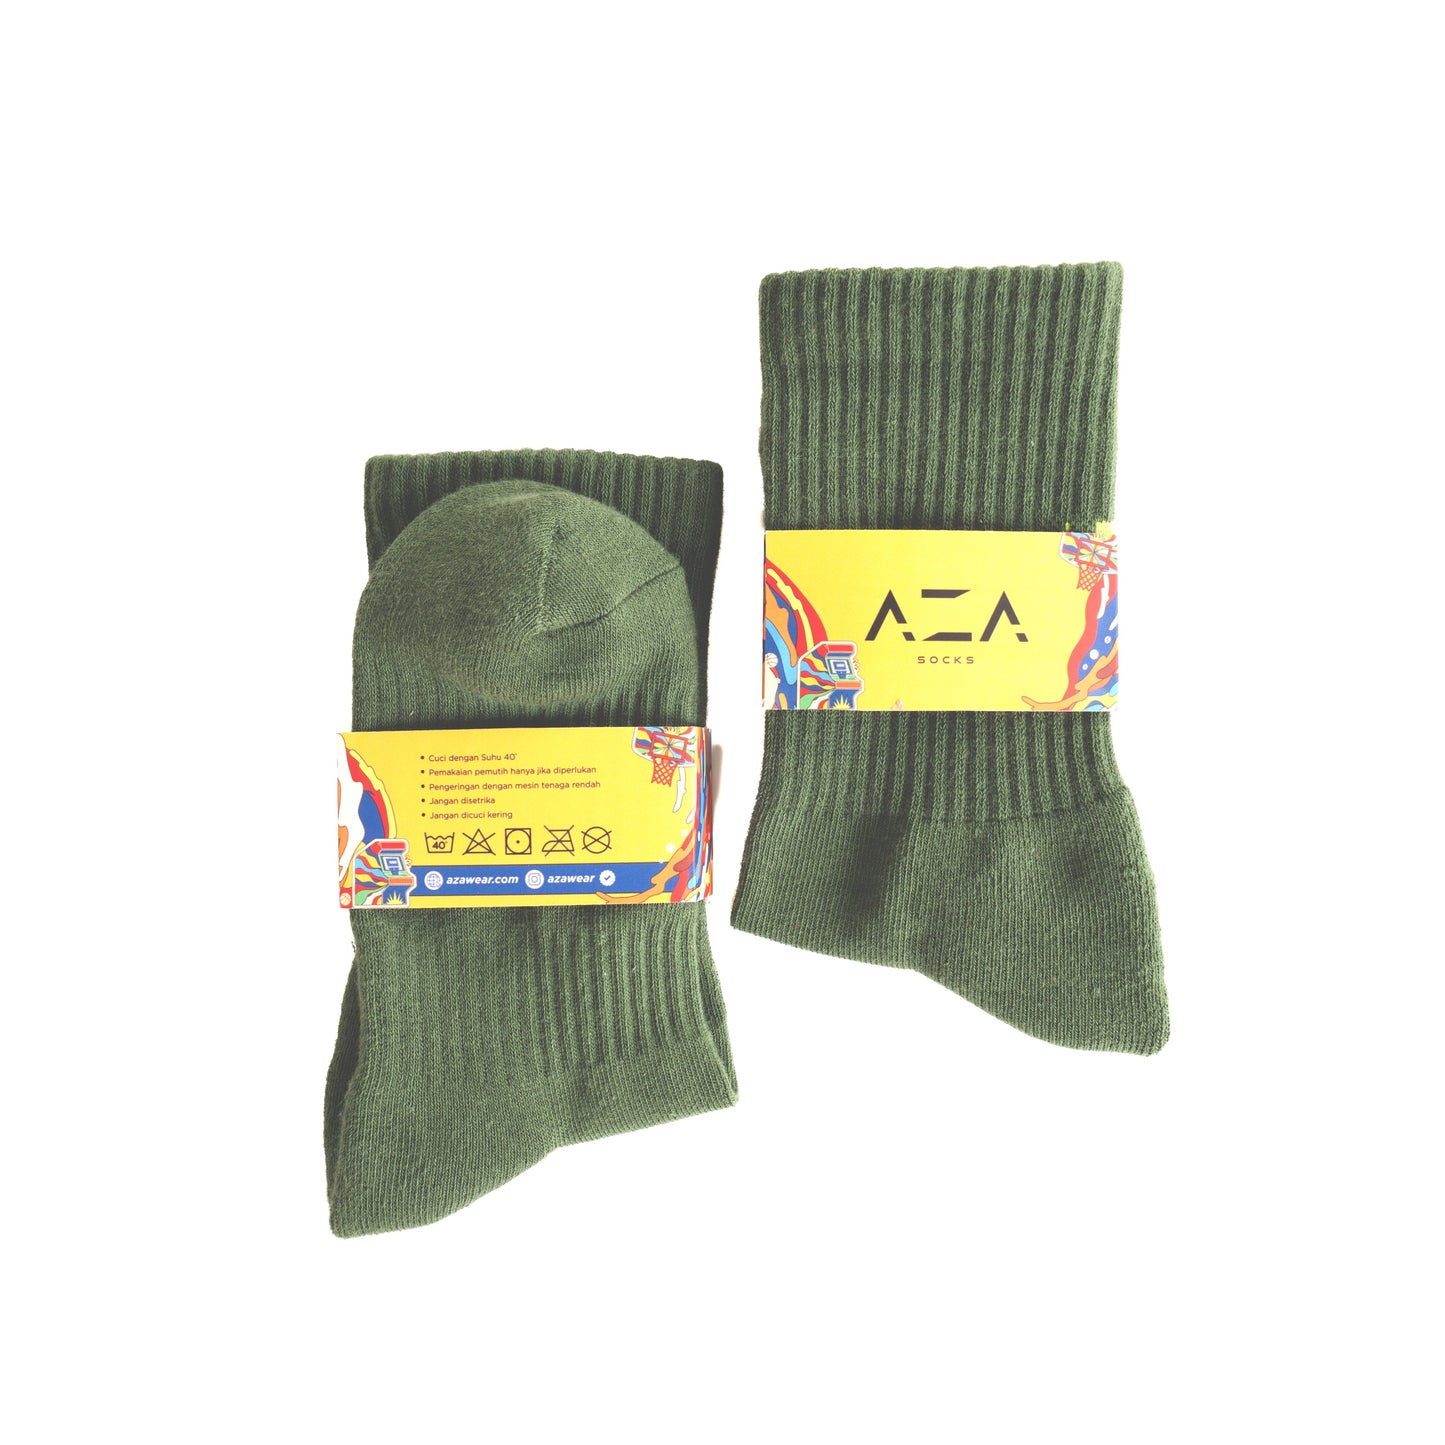 AZA Socks Colorful Edition - Army